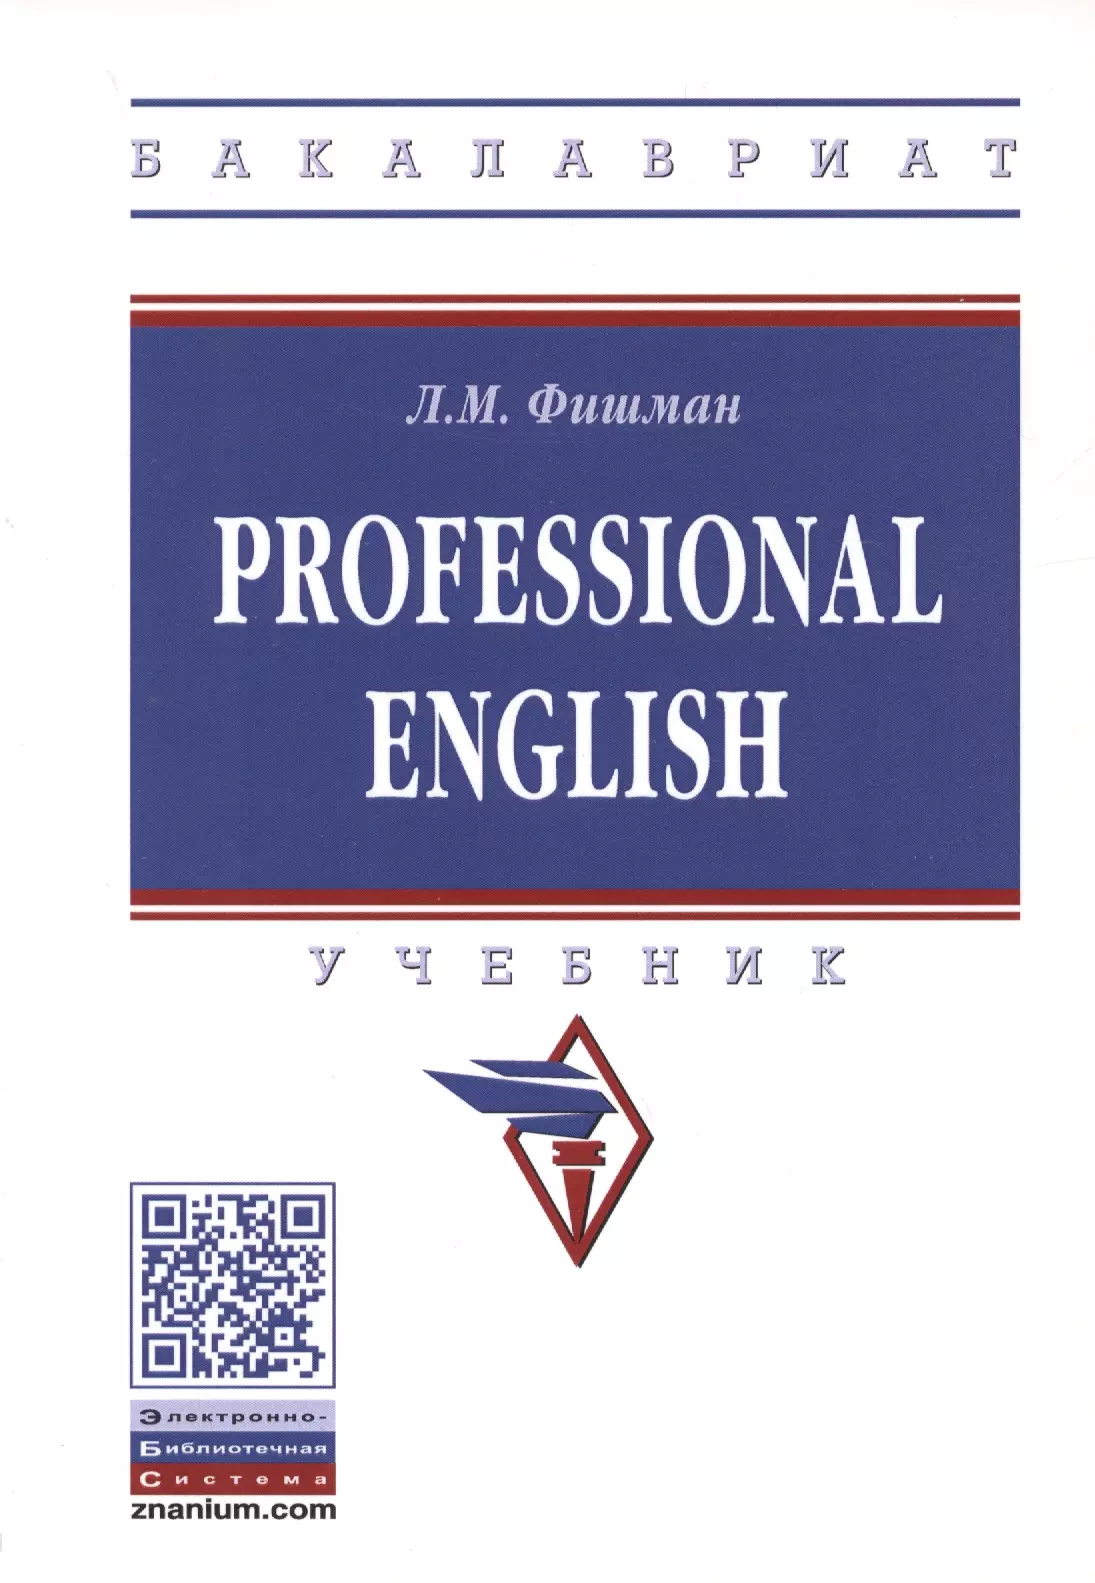  - Professional English